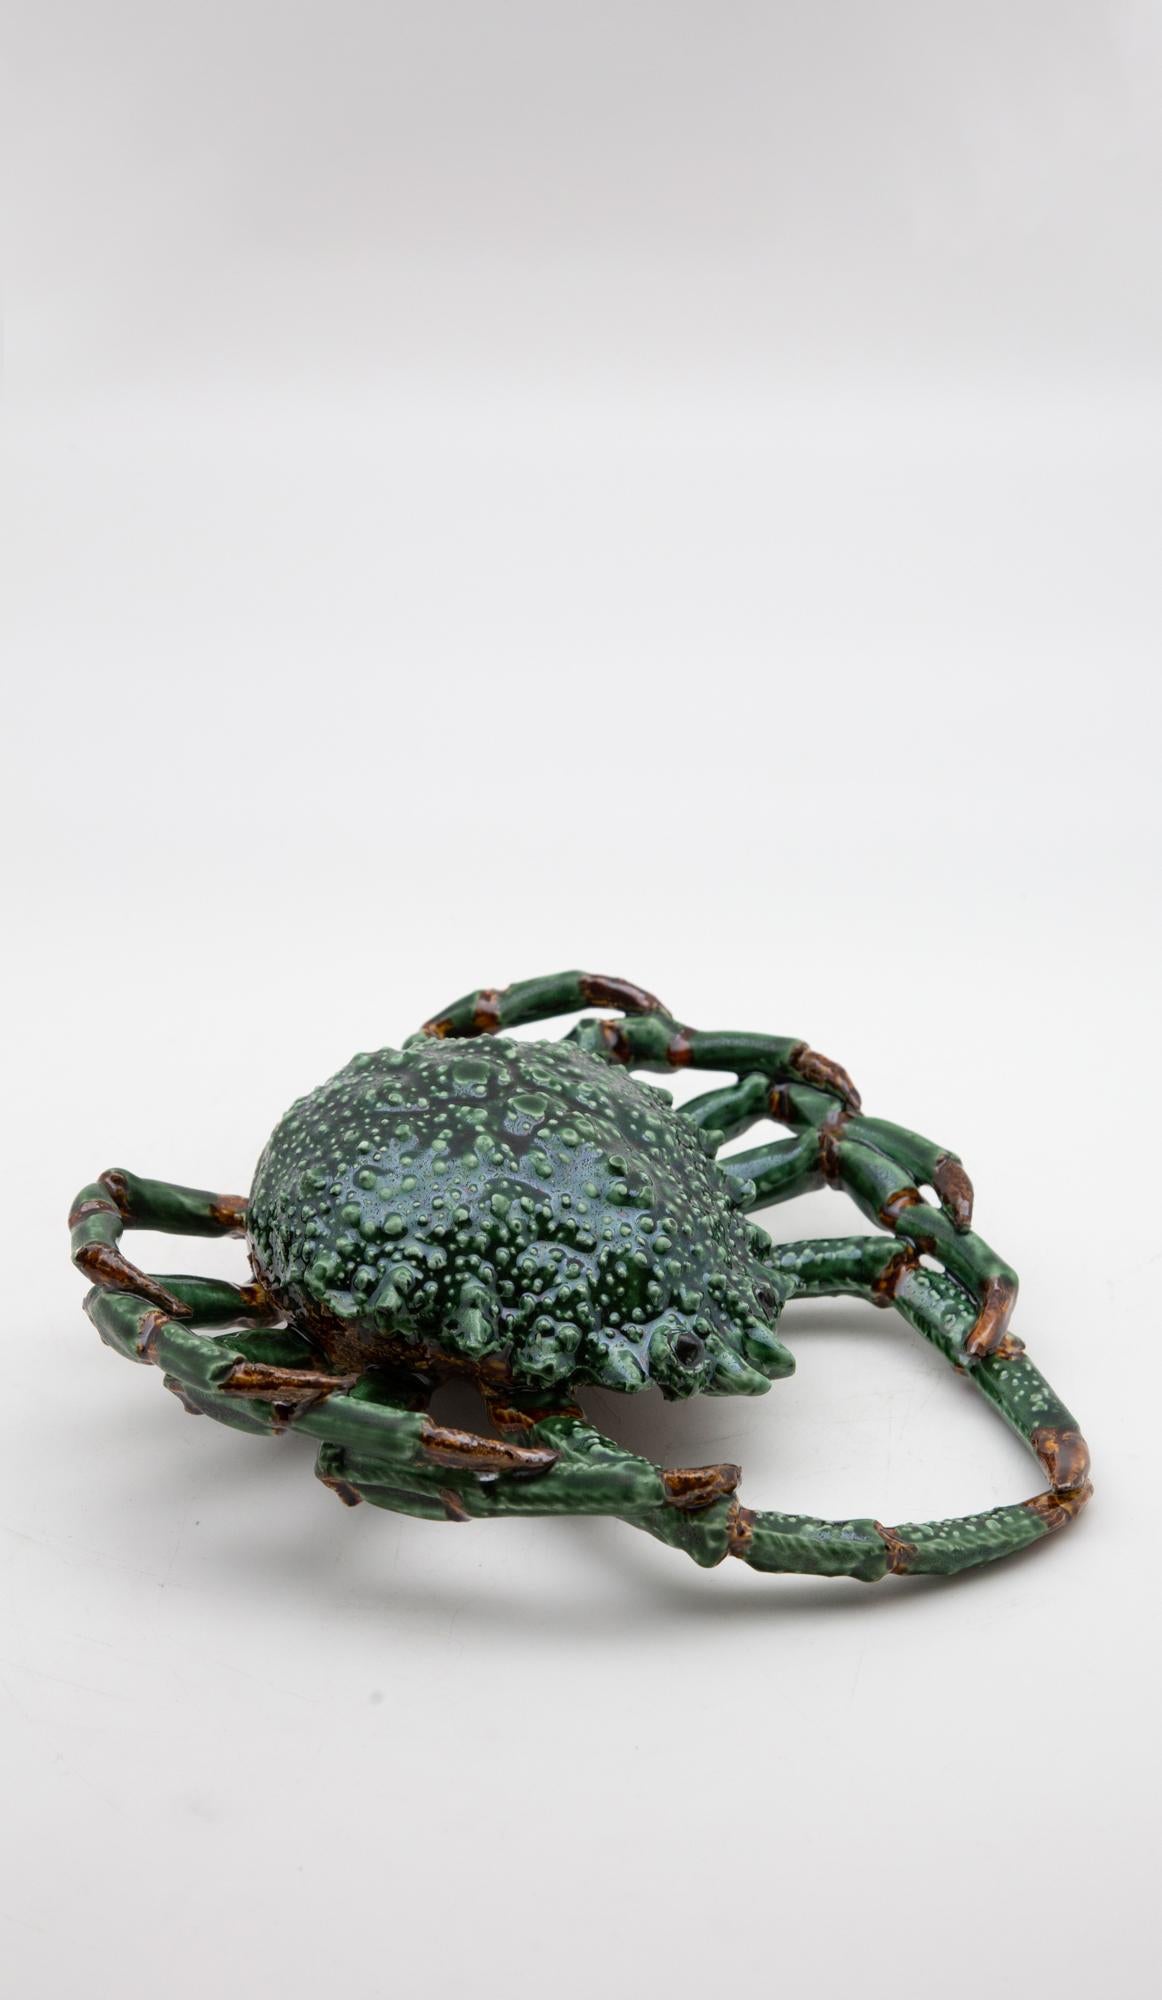 Contemporary Portuguese Handmade Pallissy or Majolica Green Ceramic Spider Crab